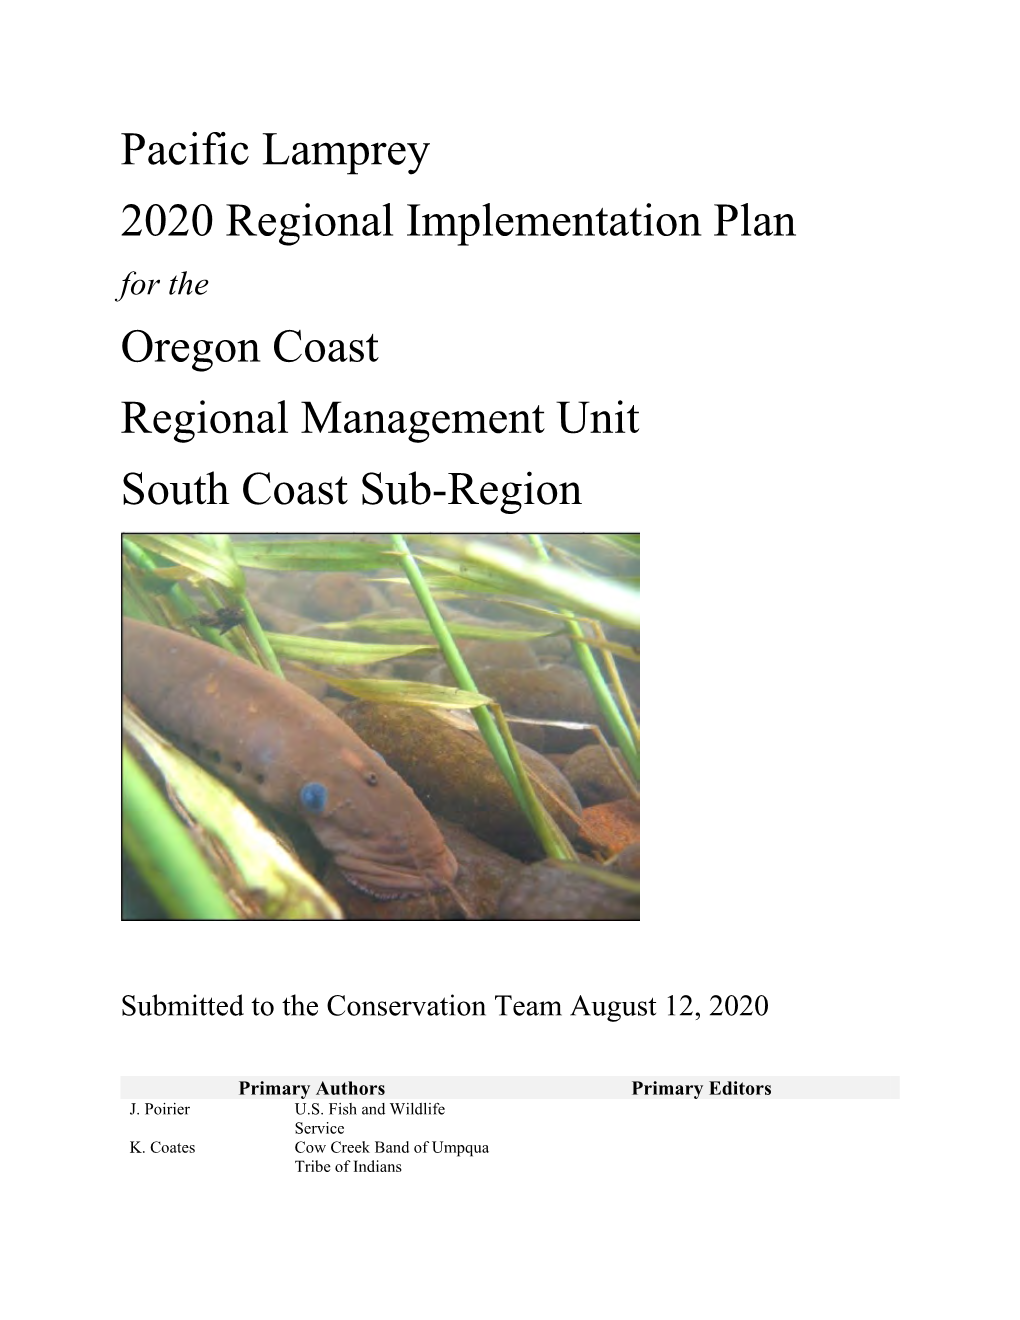 Pacific Lamprey 2020 Regional Implementation Plan Oregon Coast